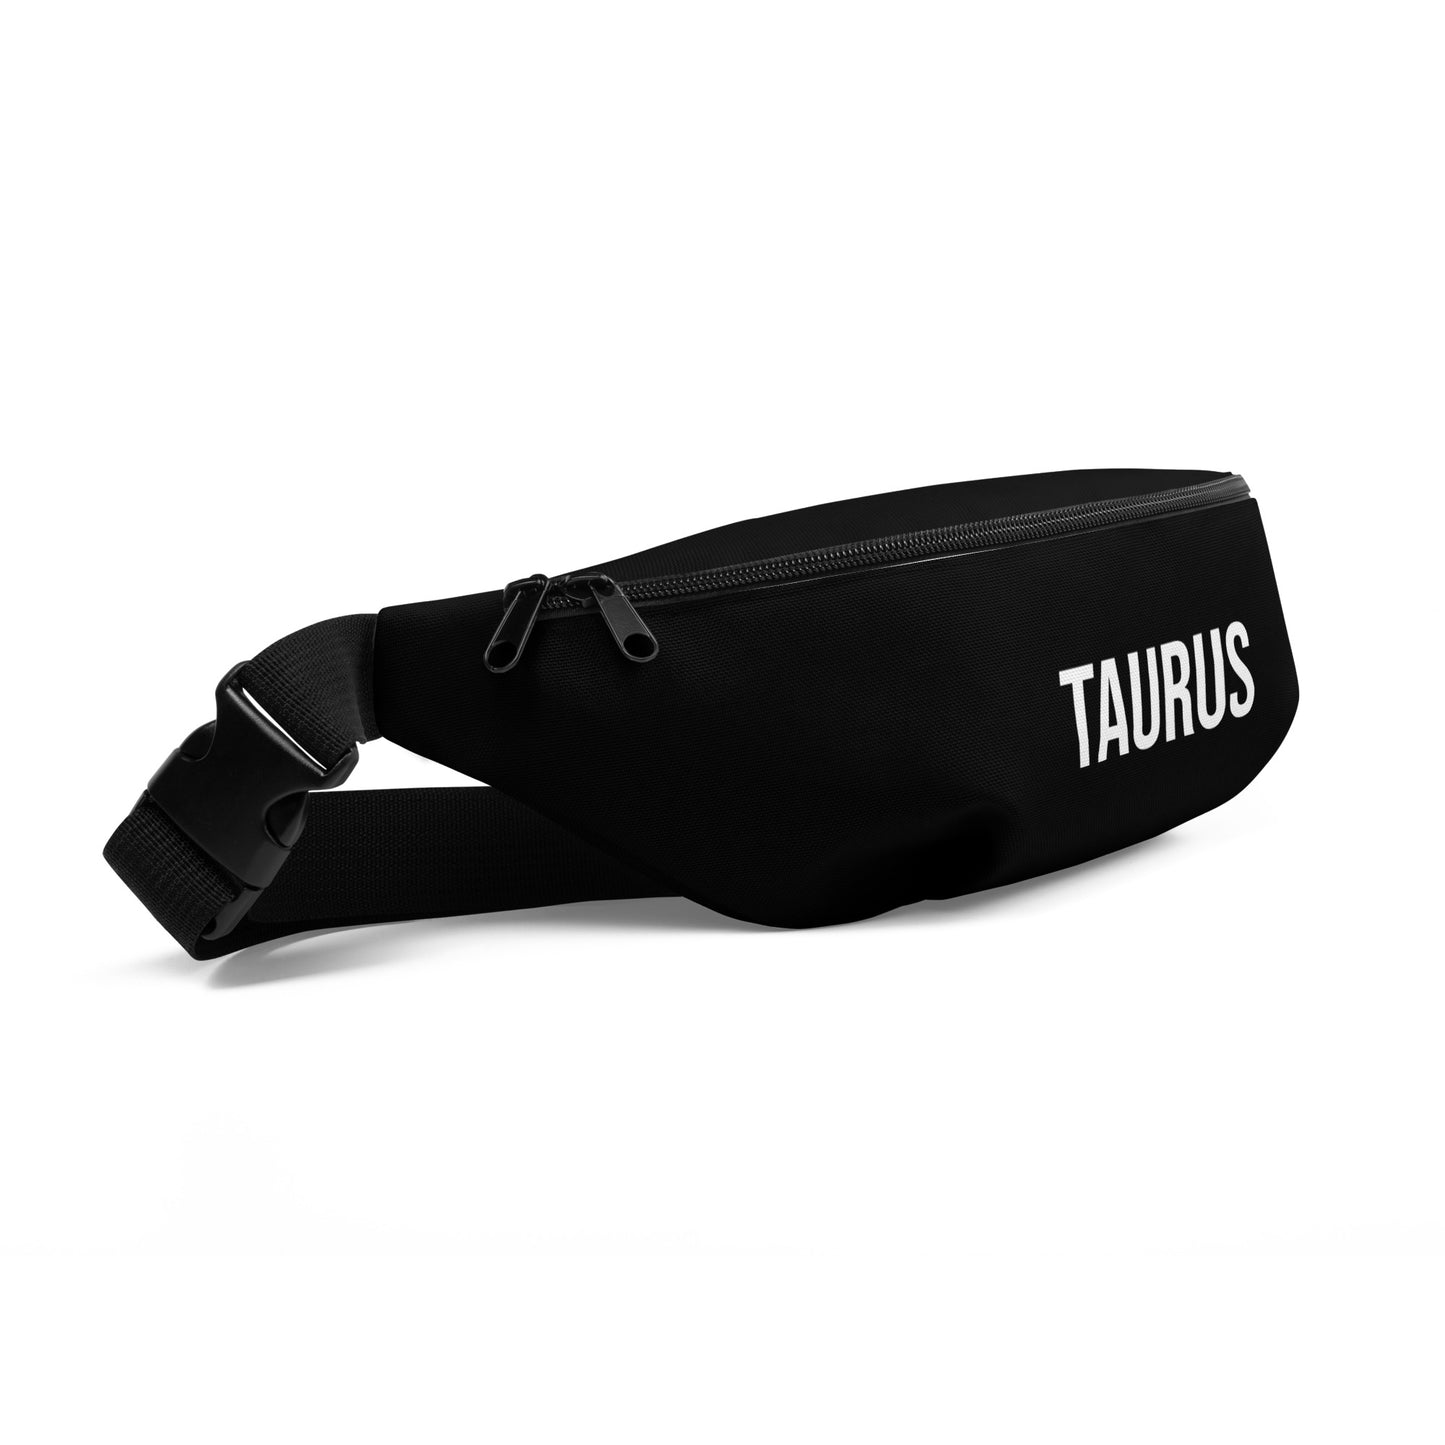 Taurus Belt Bag (Black)